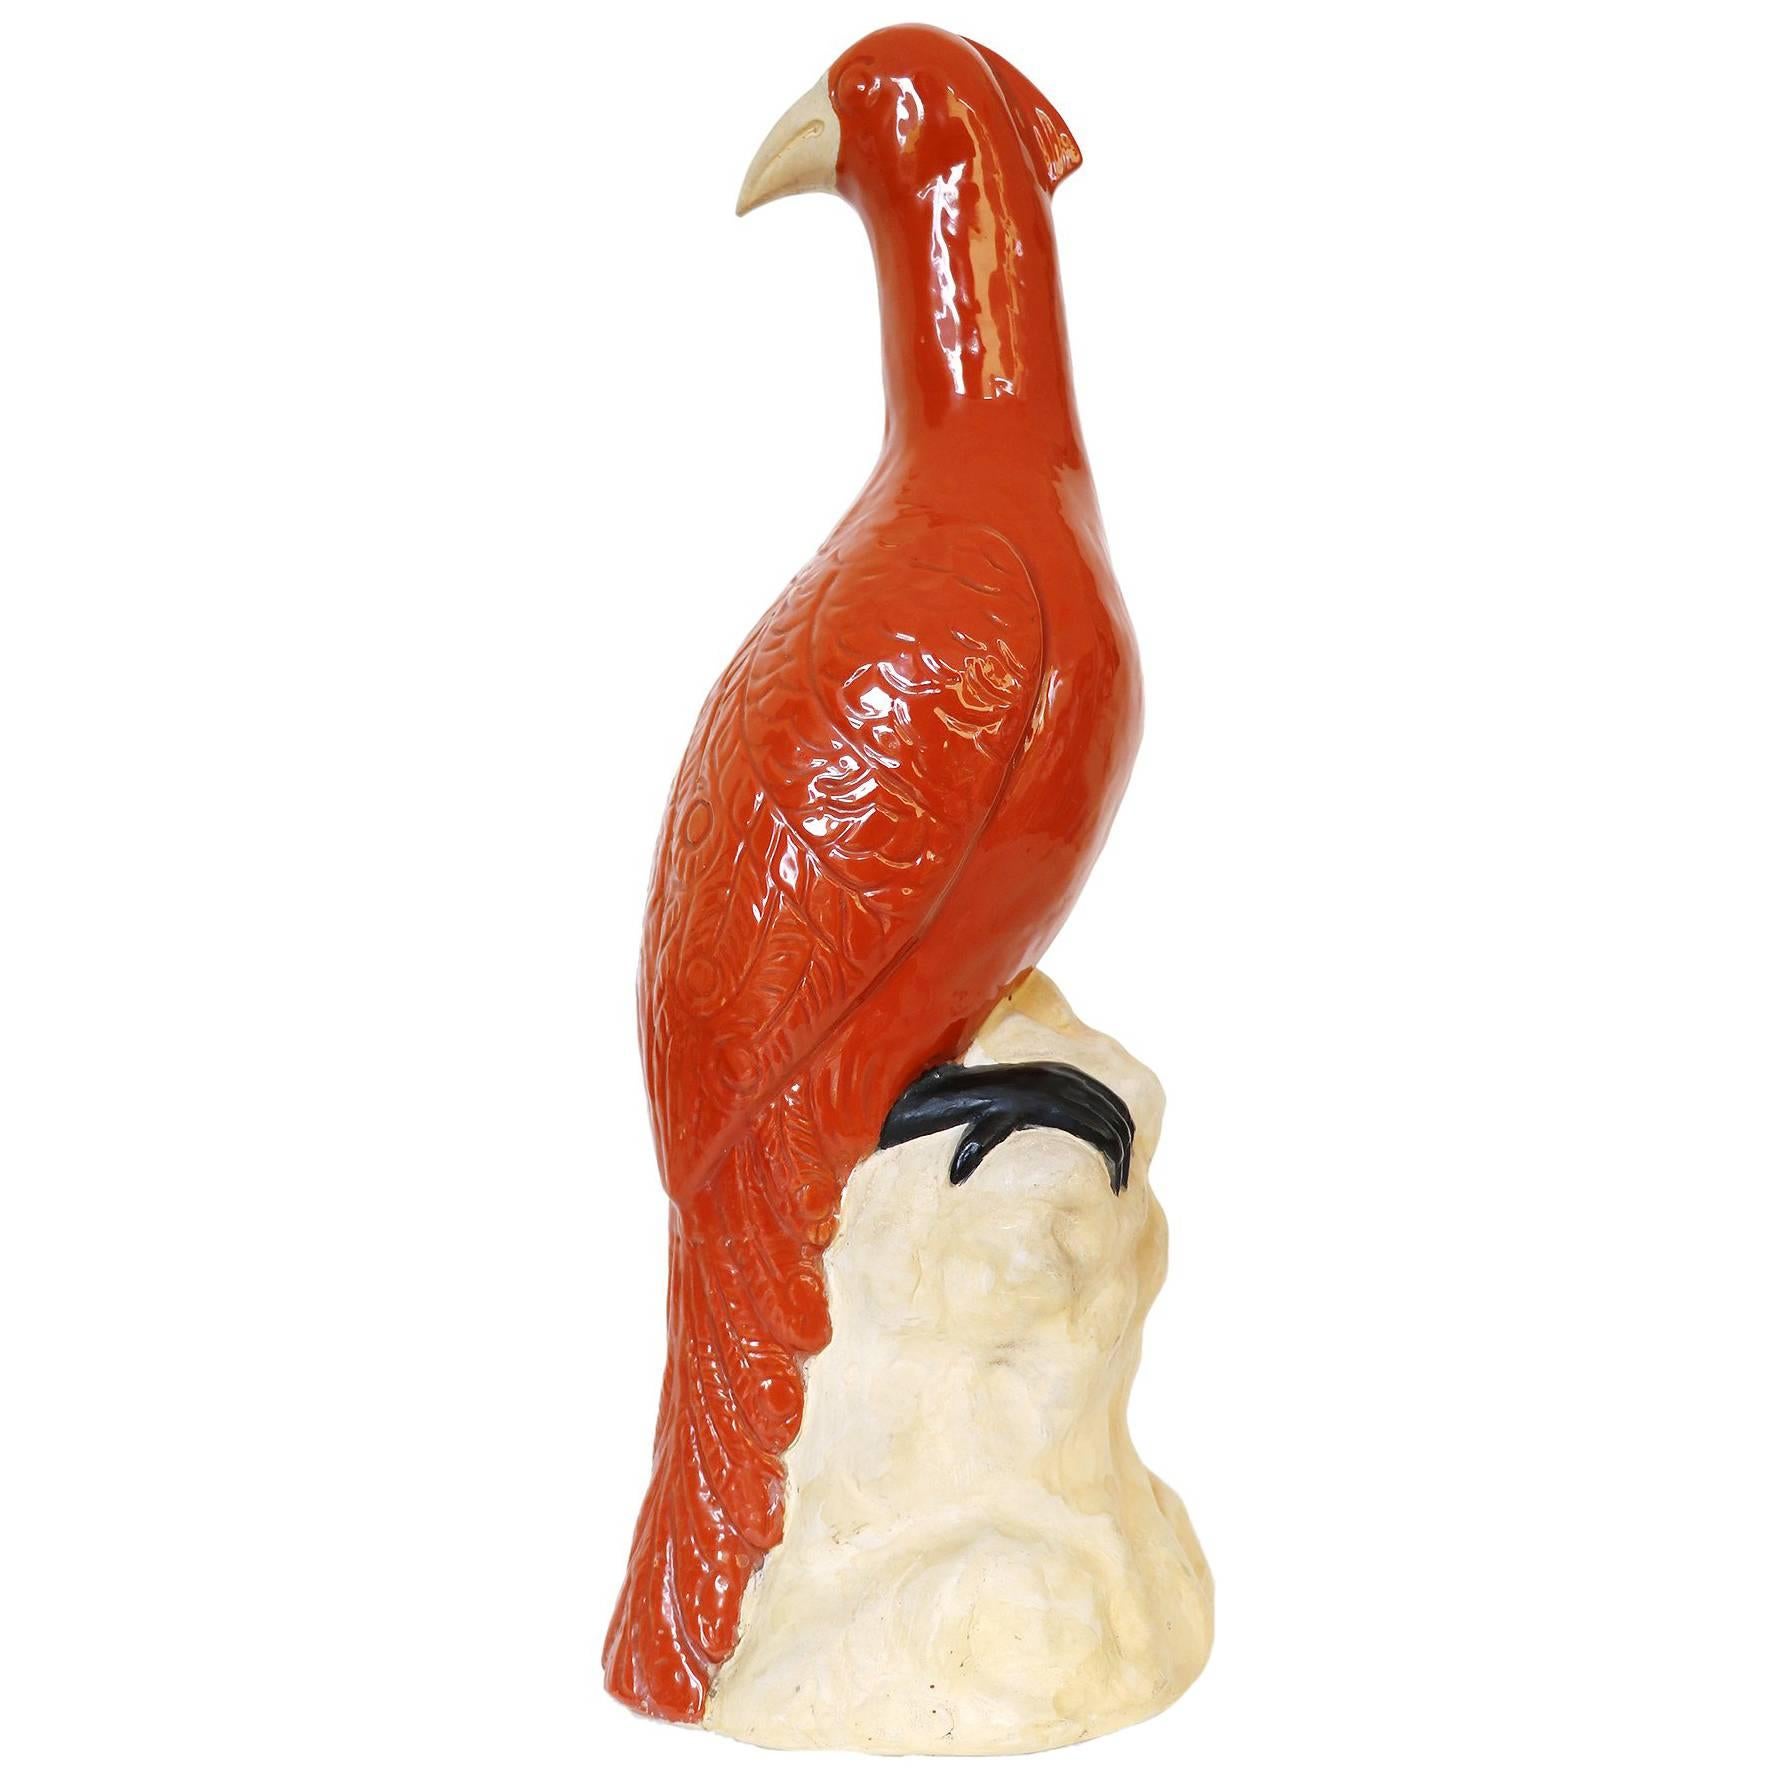 Große große italienische Majolika-Keramik-Figur eines Vogels aus Seepferdchen